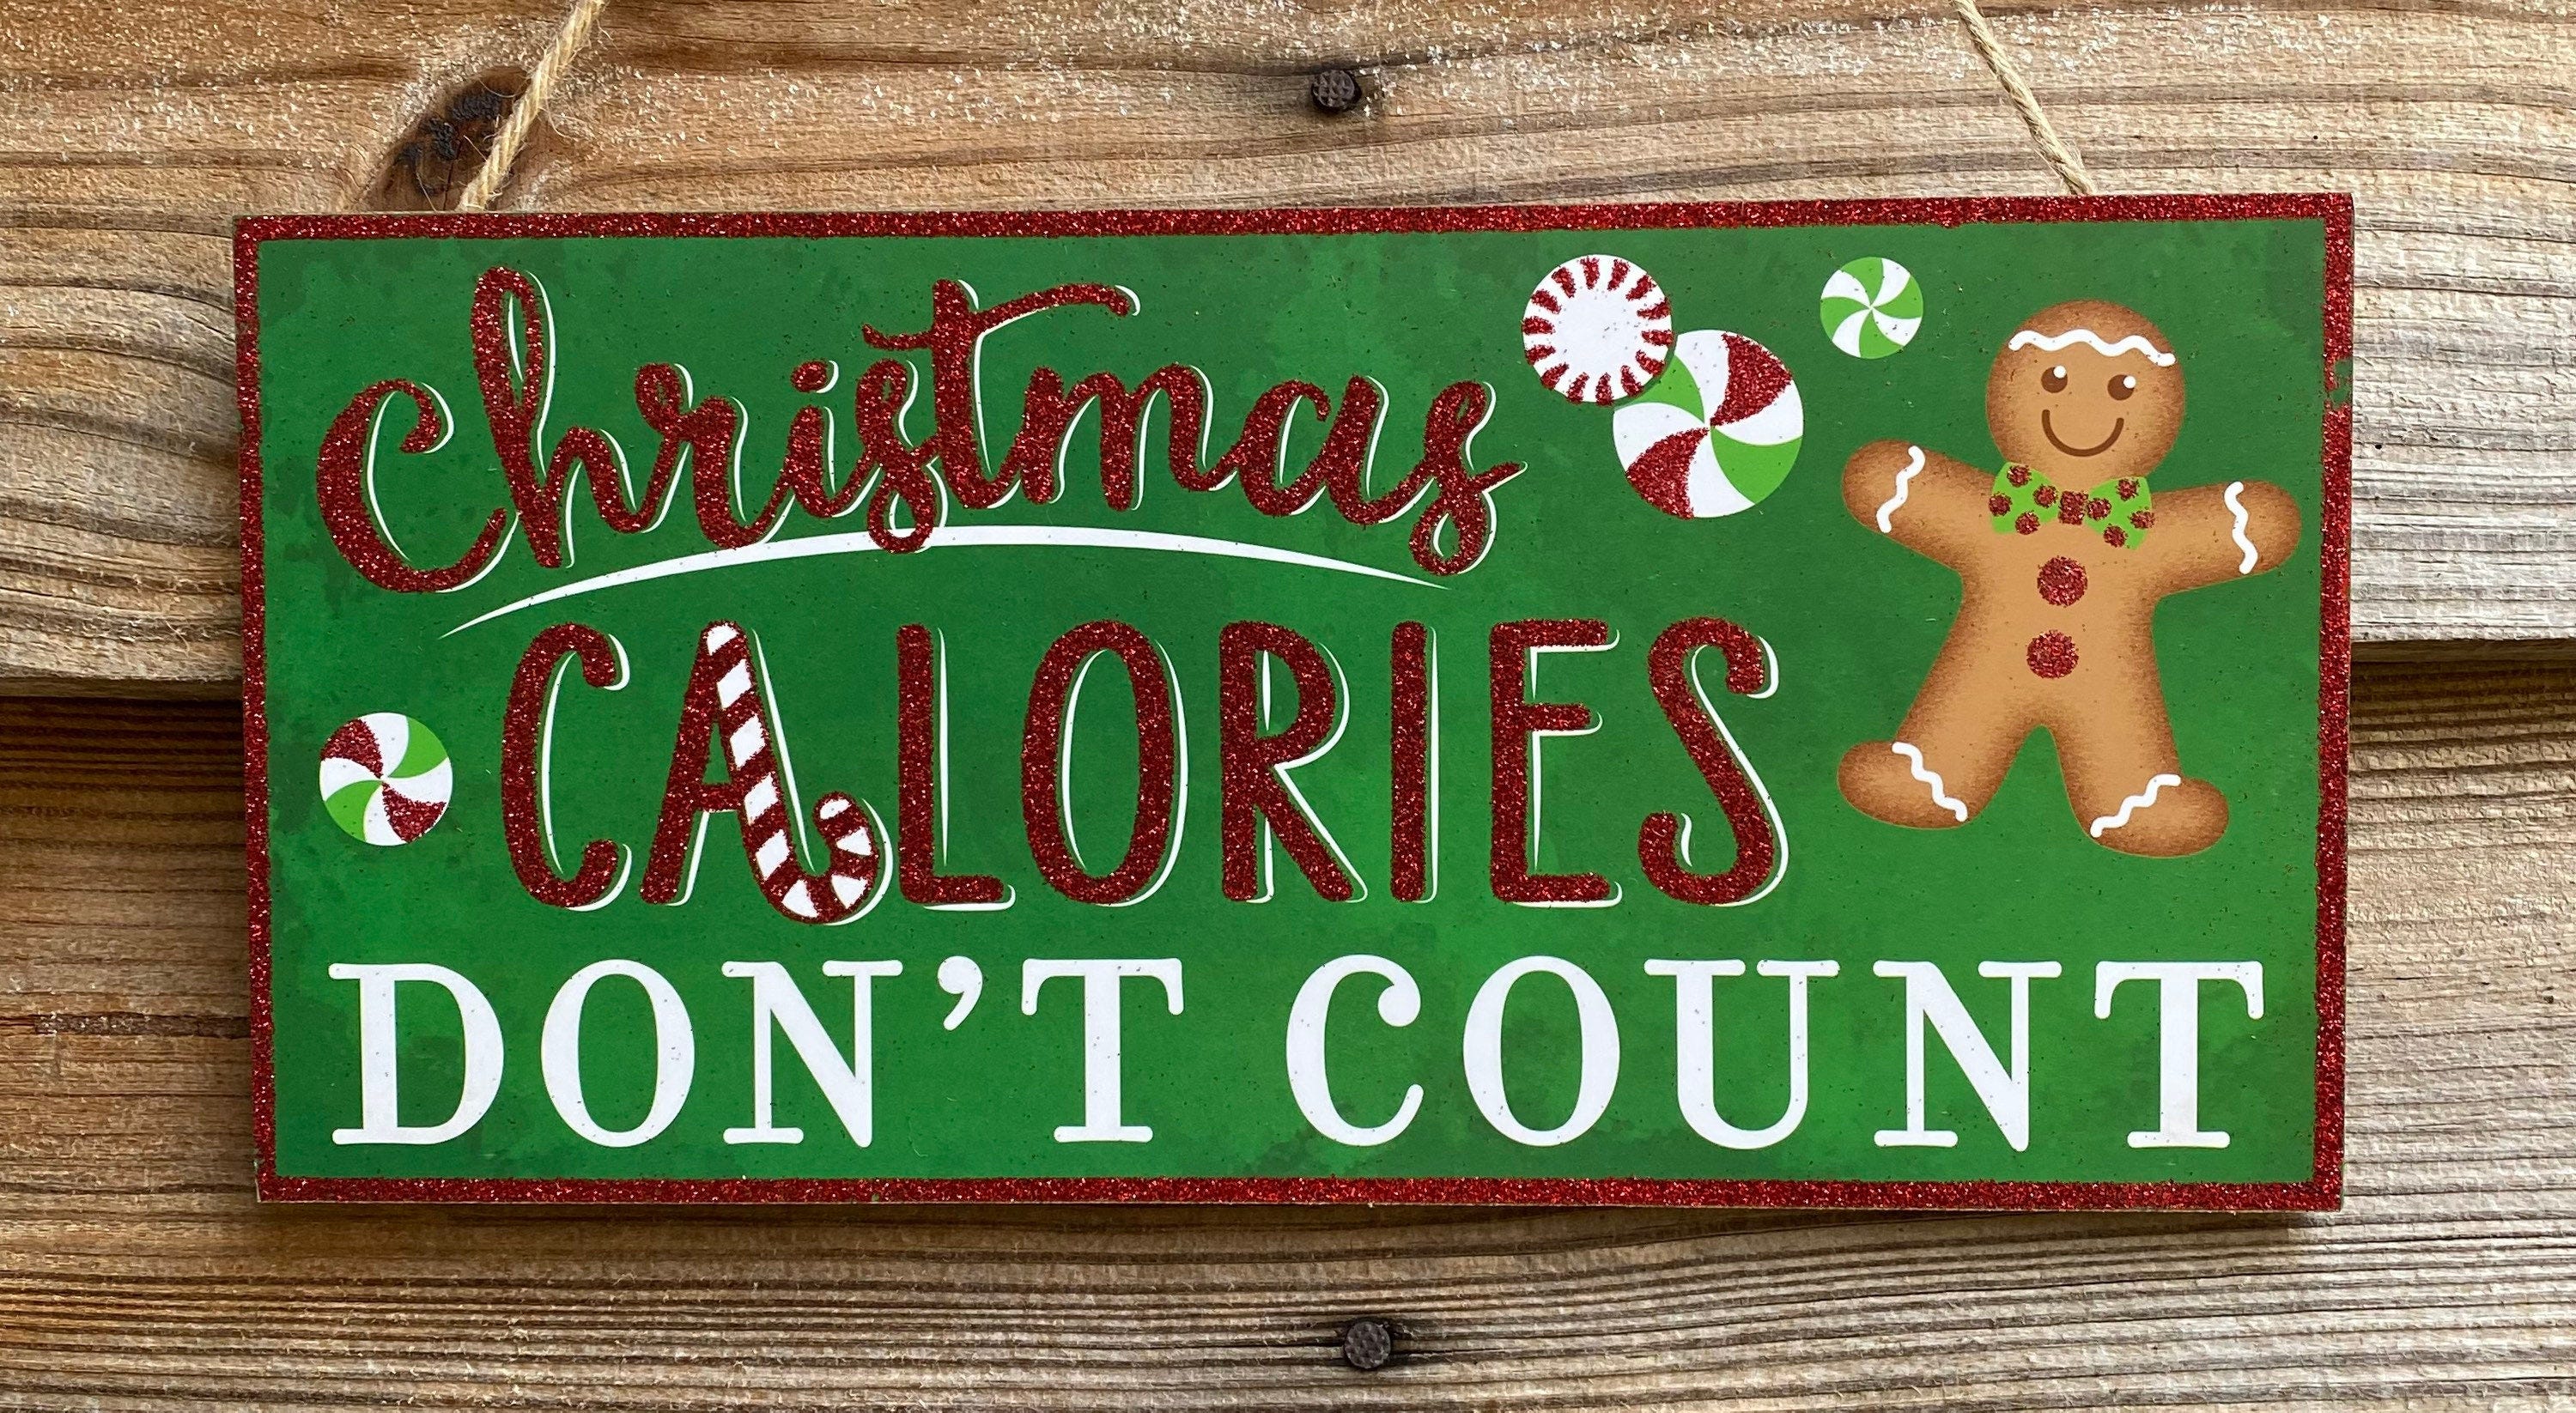 Christmas calories don’t count wreath decor wreath attachment wreath supplies craft supplies sign farmhouse sign wreath center